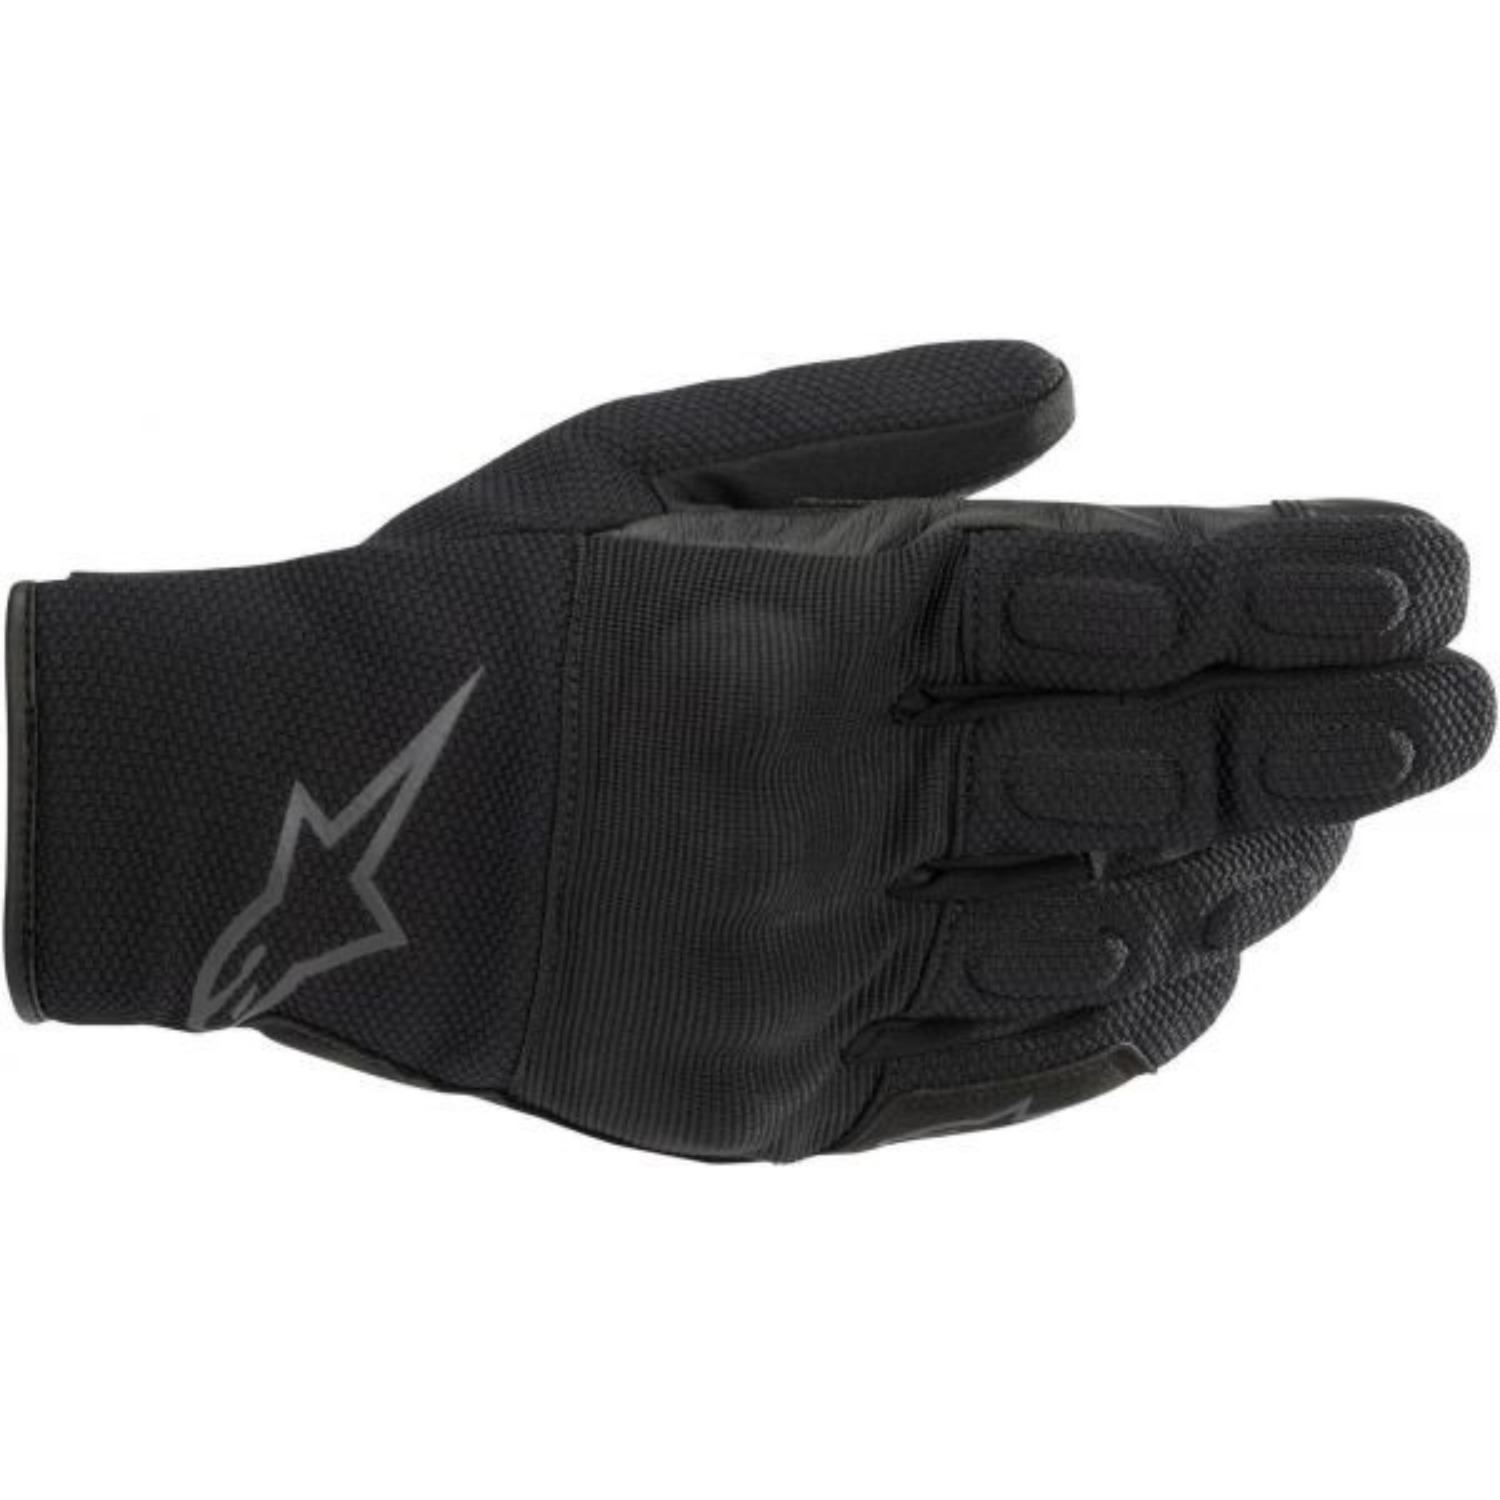 Image of Alpinestars S Max Drystar Gloves Black Anthracite Size XL ID 8059175098901